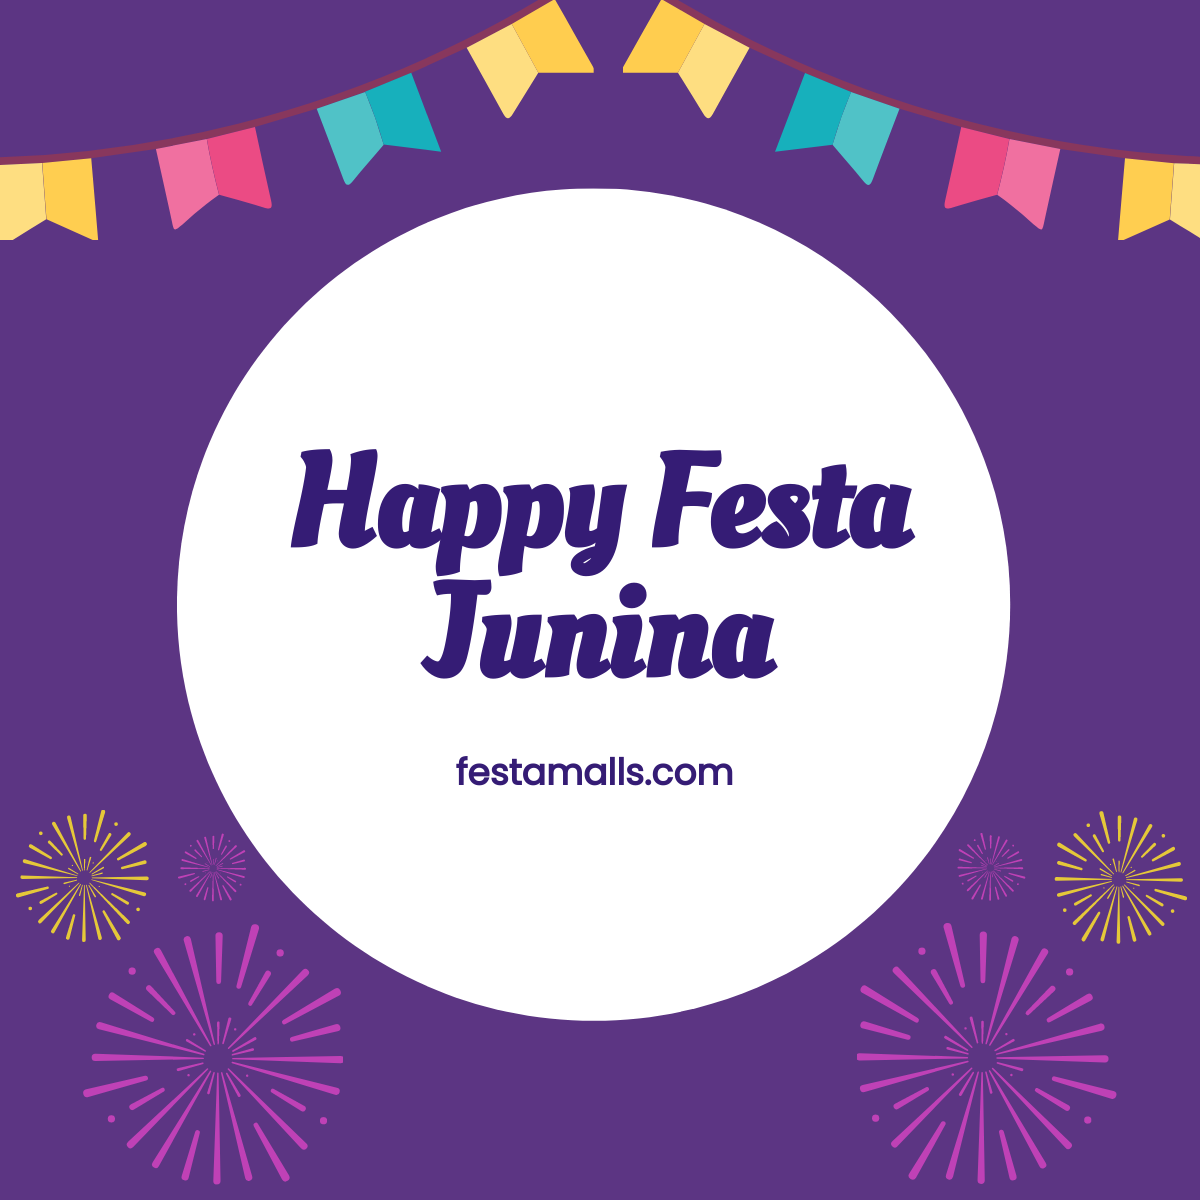 Happy Festa Junina Linkedin Post Template